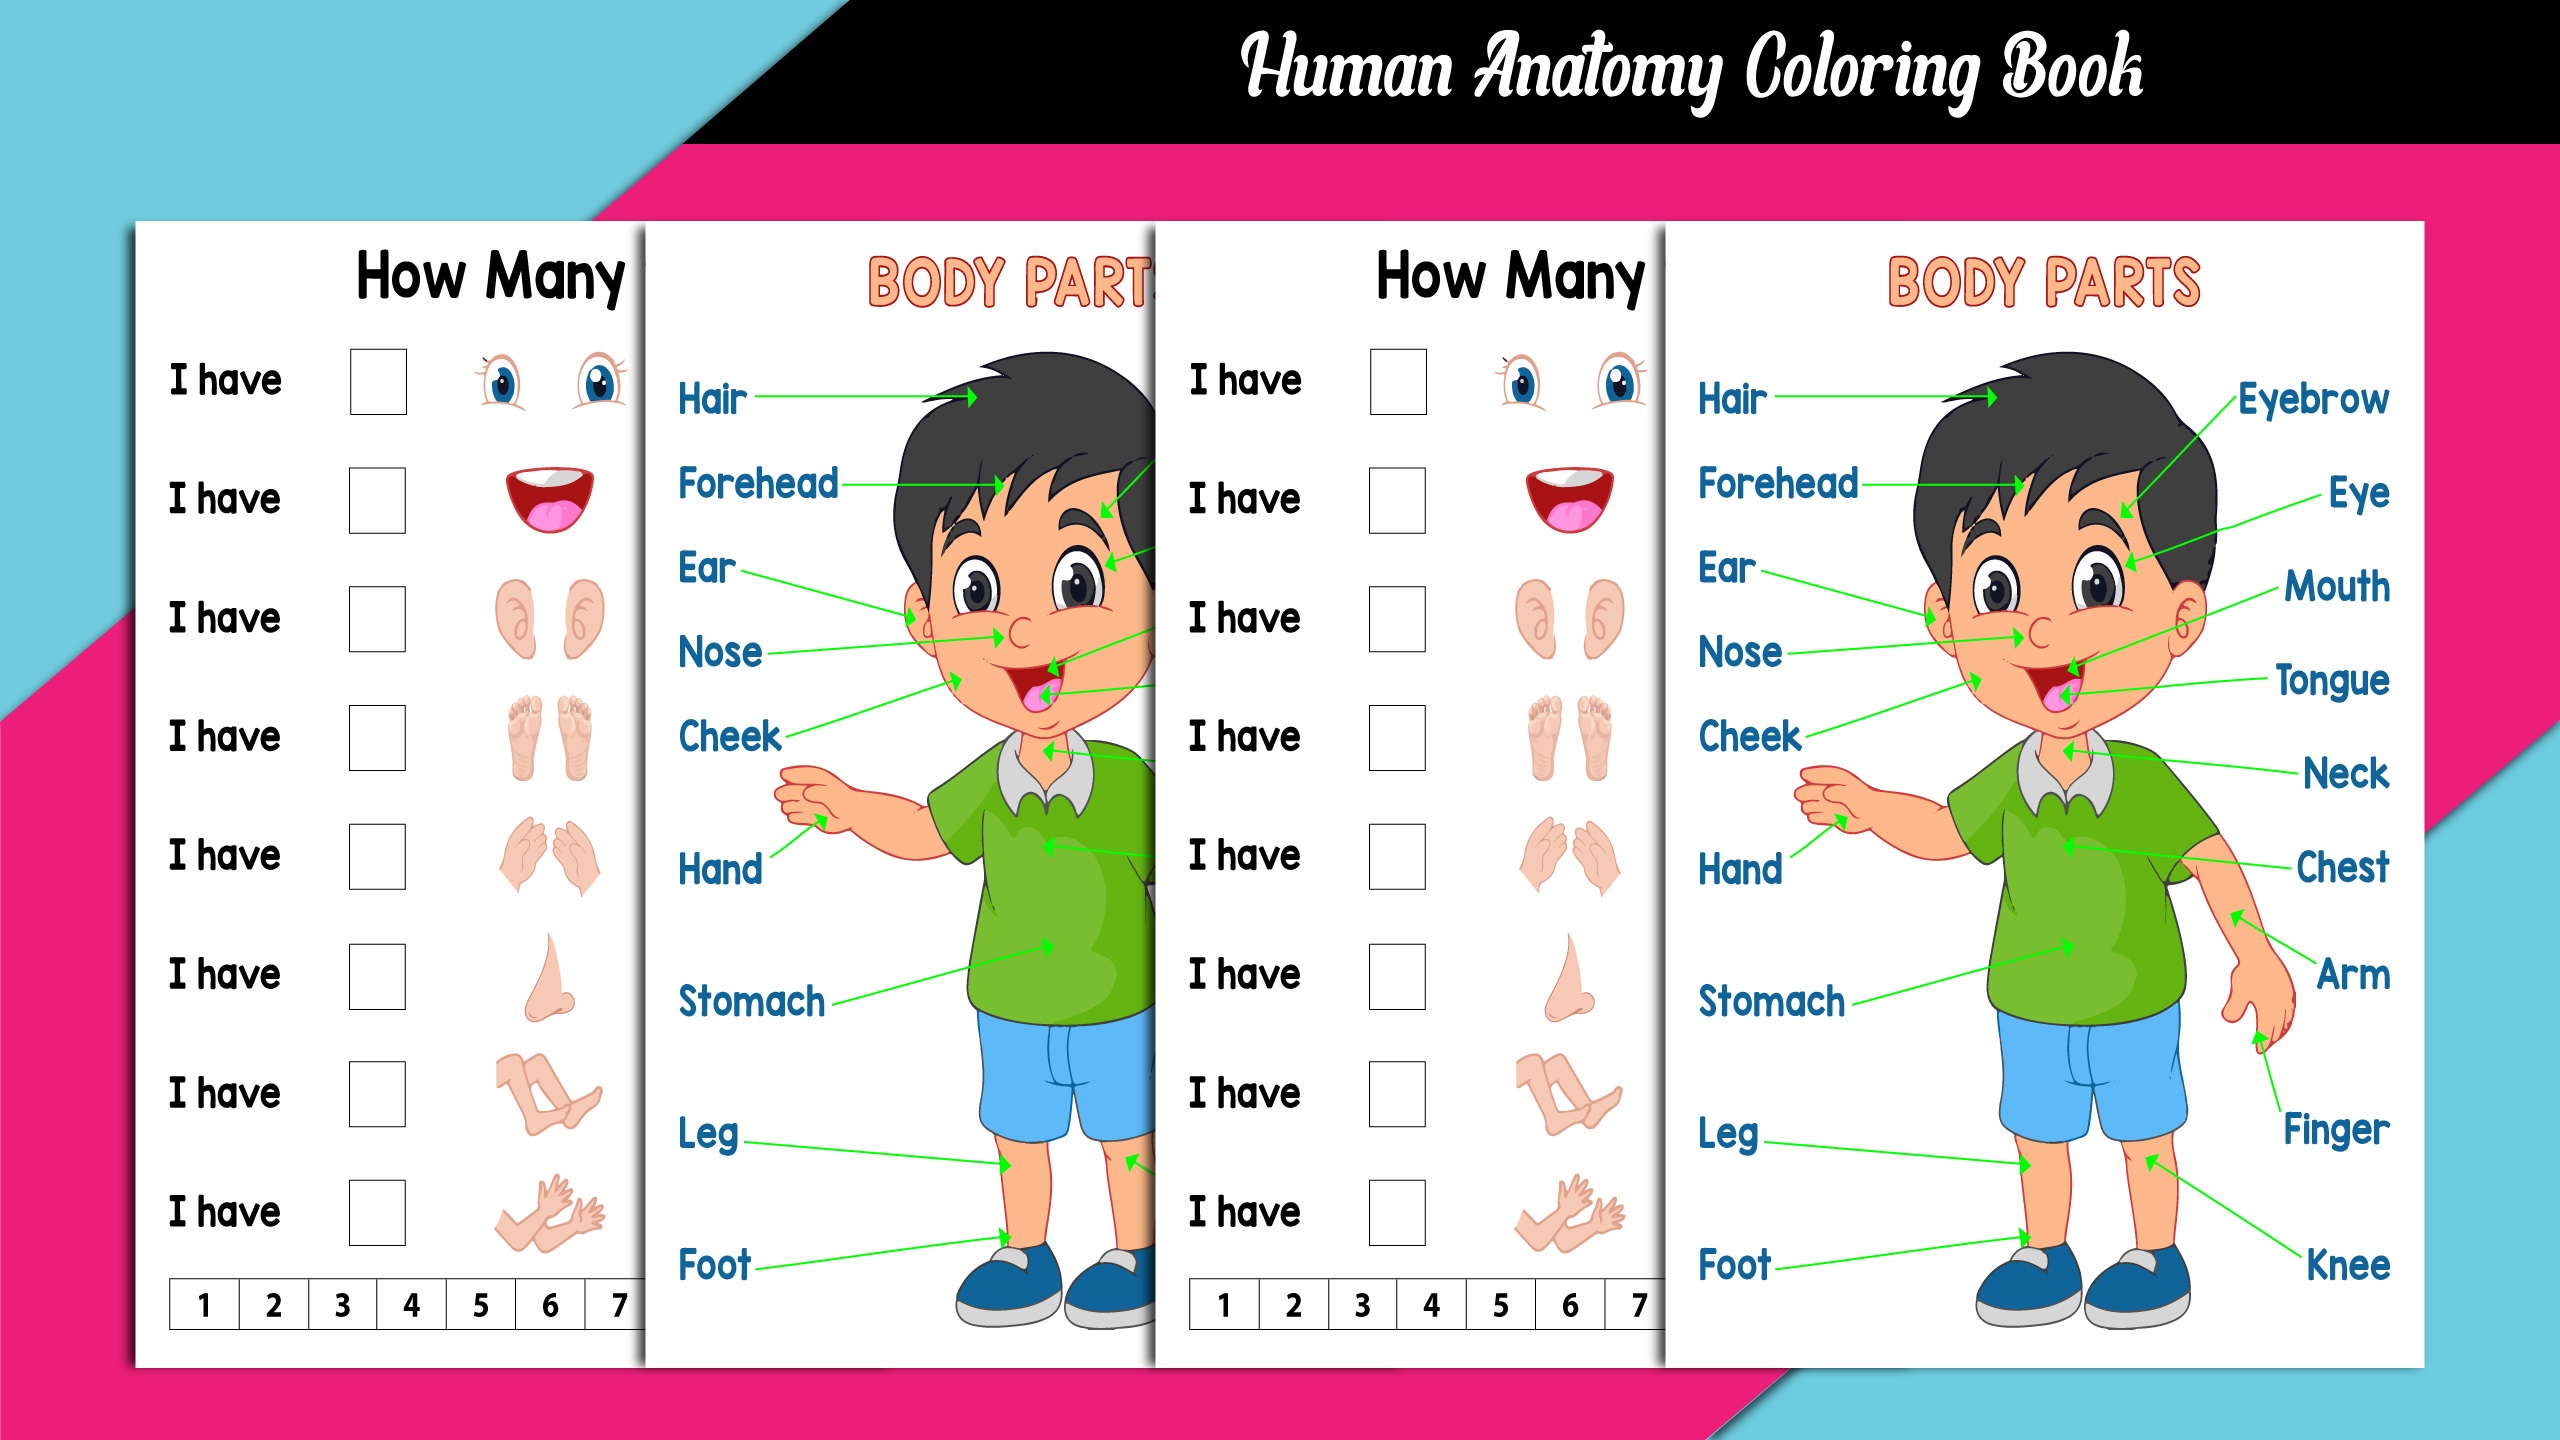 Human Anatomy Coloring Book Interior facebook image.